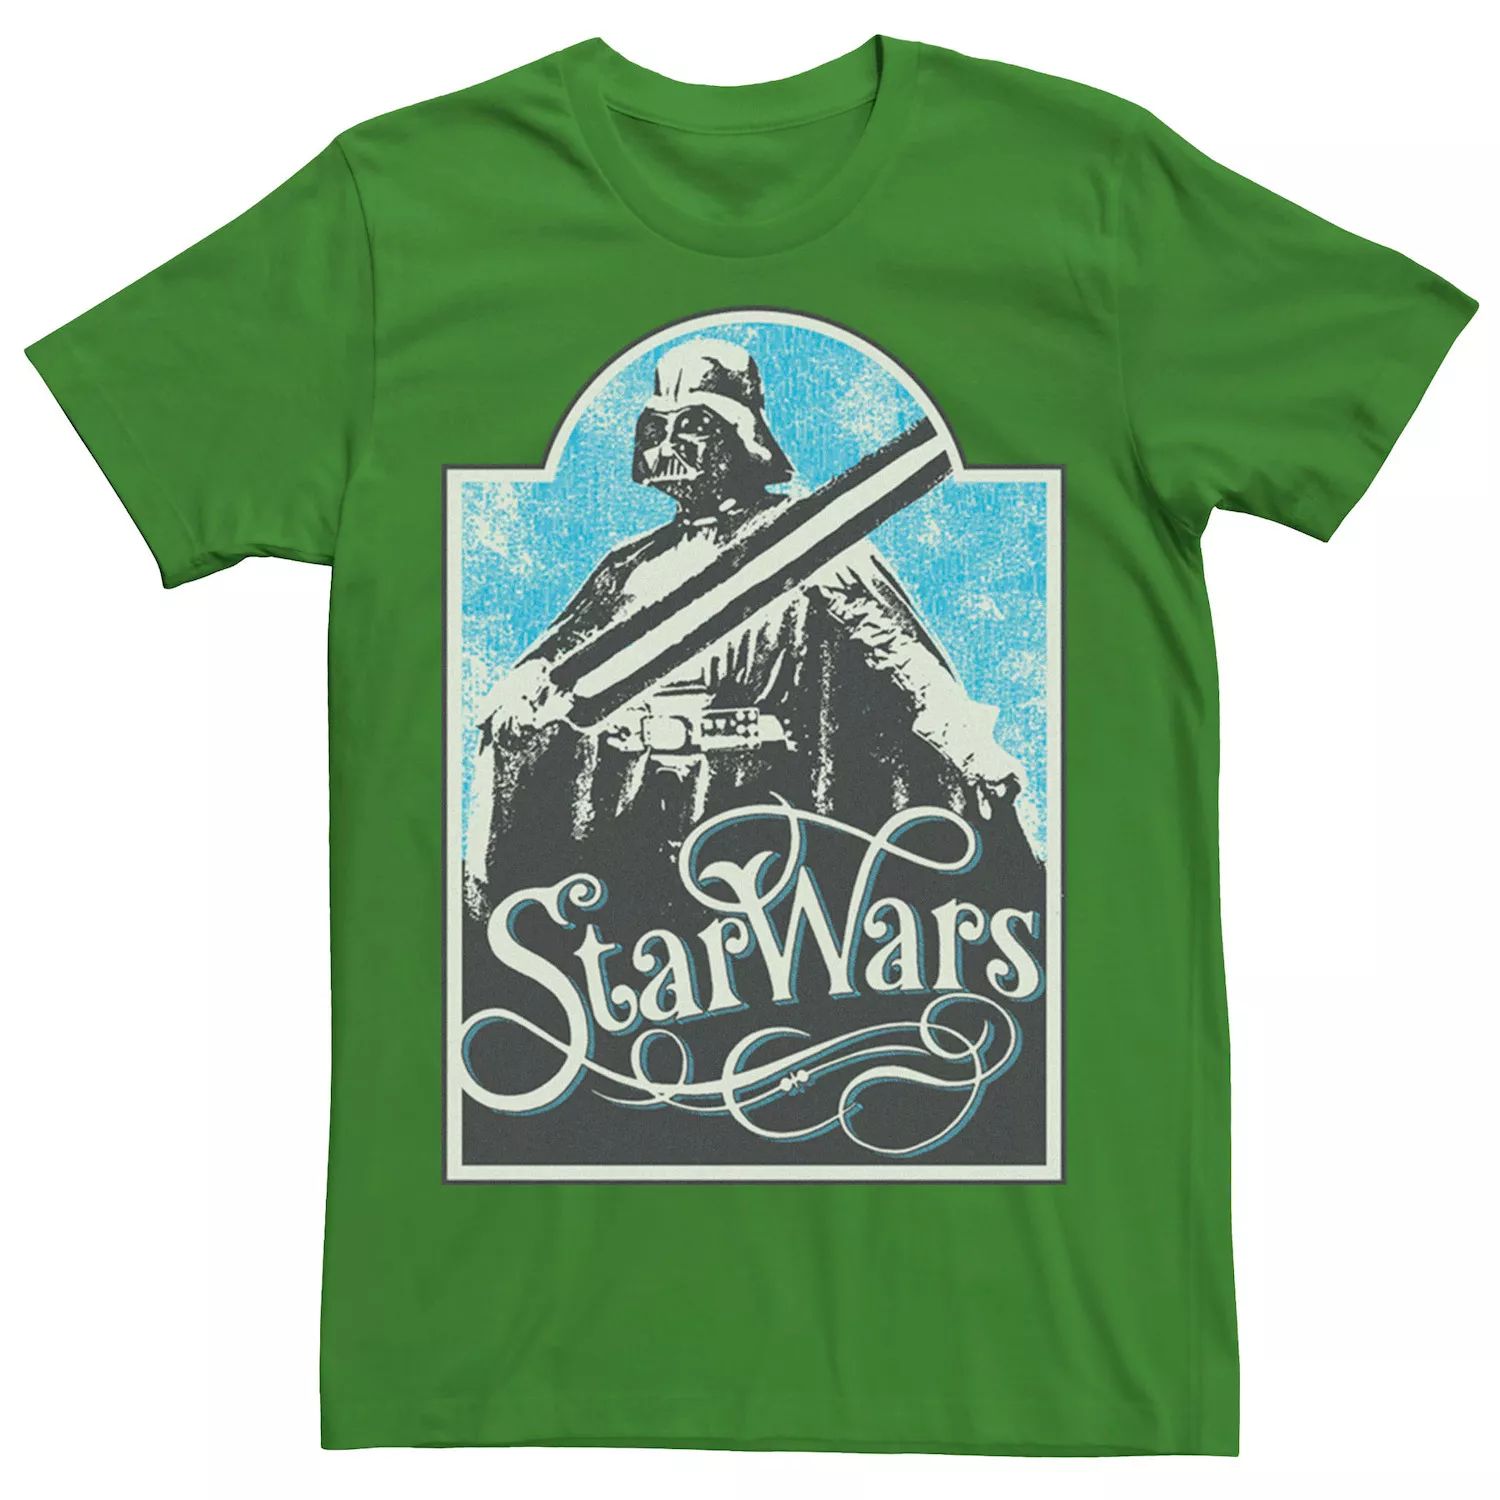 Мужская футболка с плакатом Vader в стиле ретро Star Wars